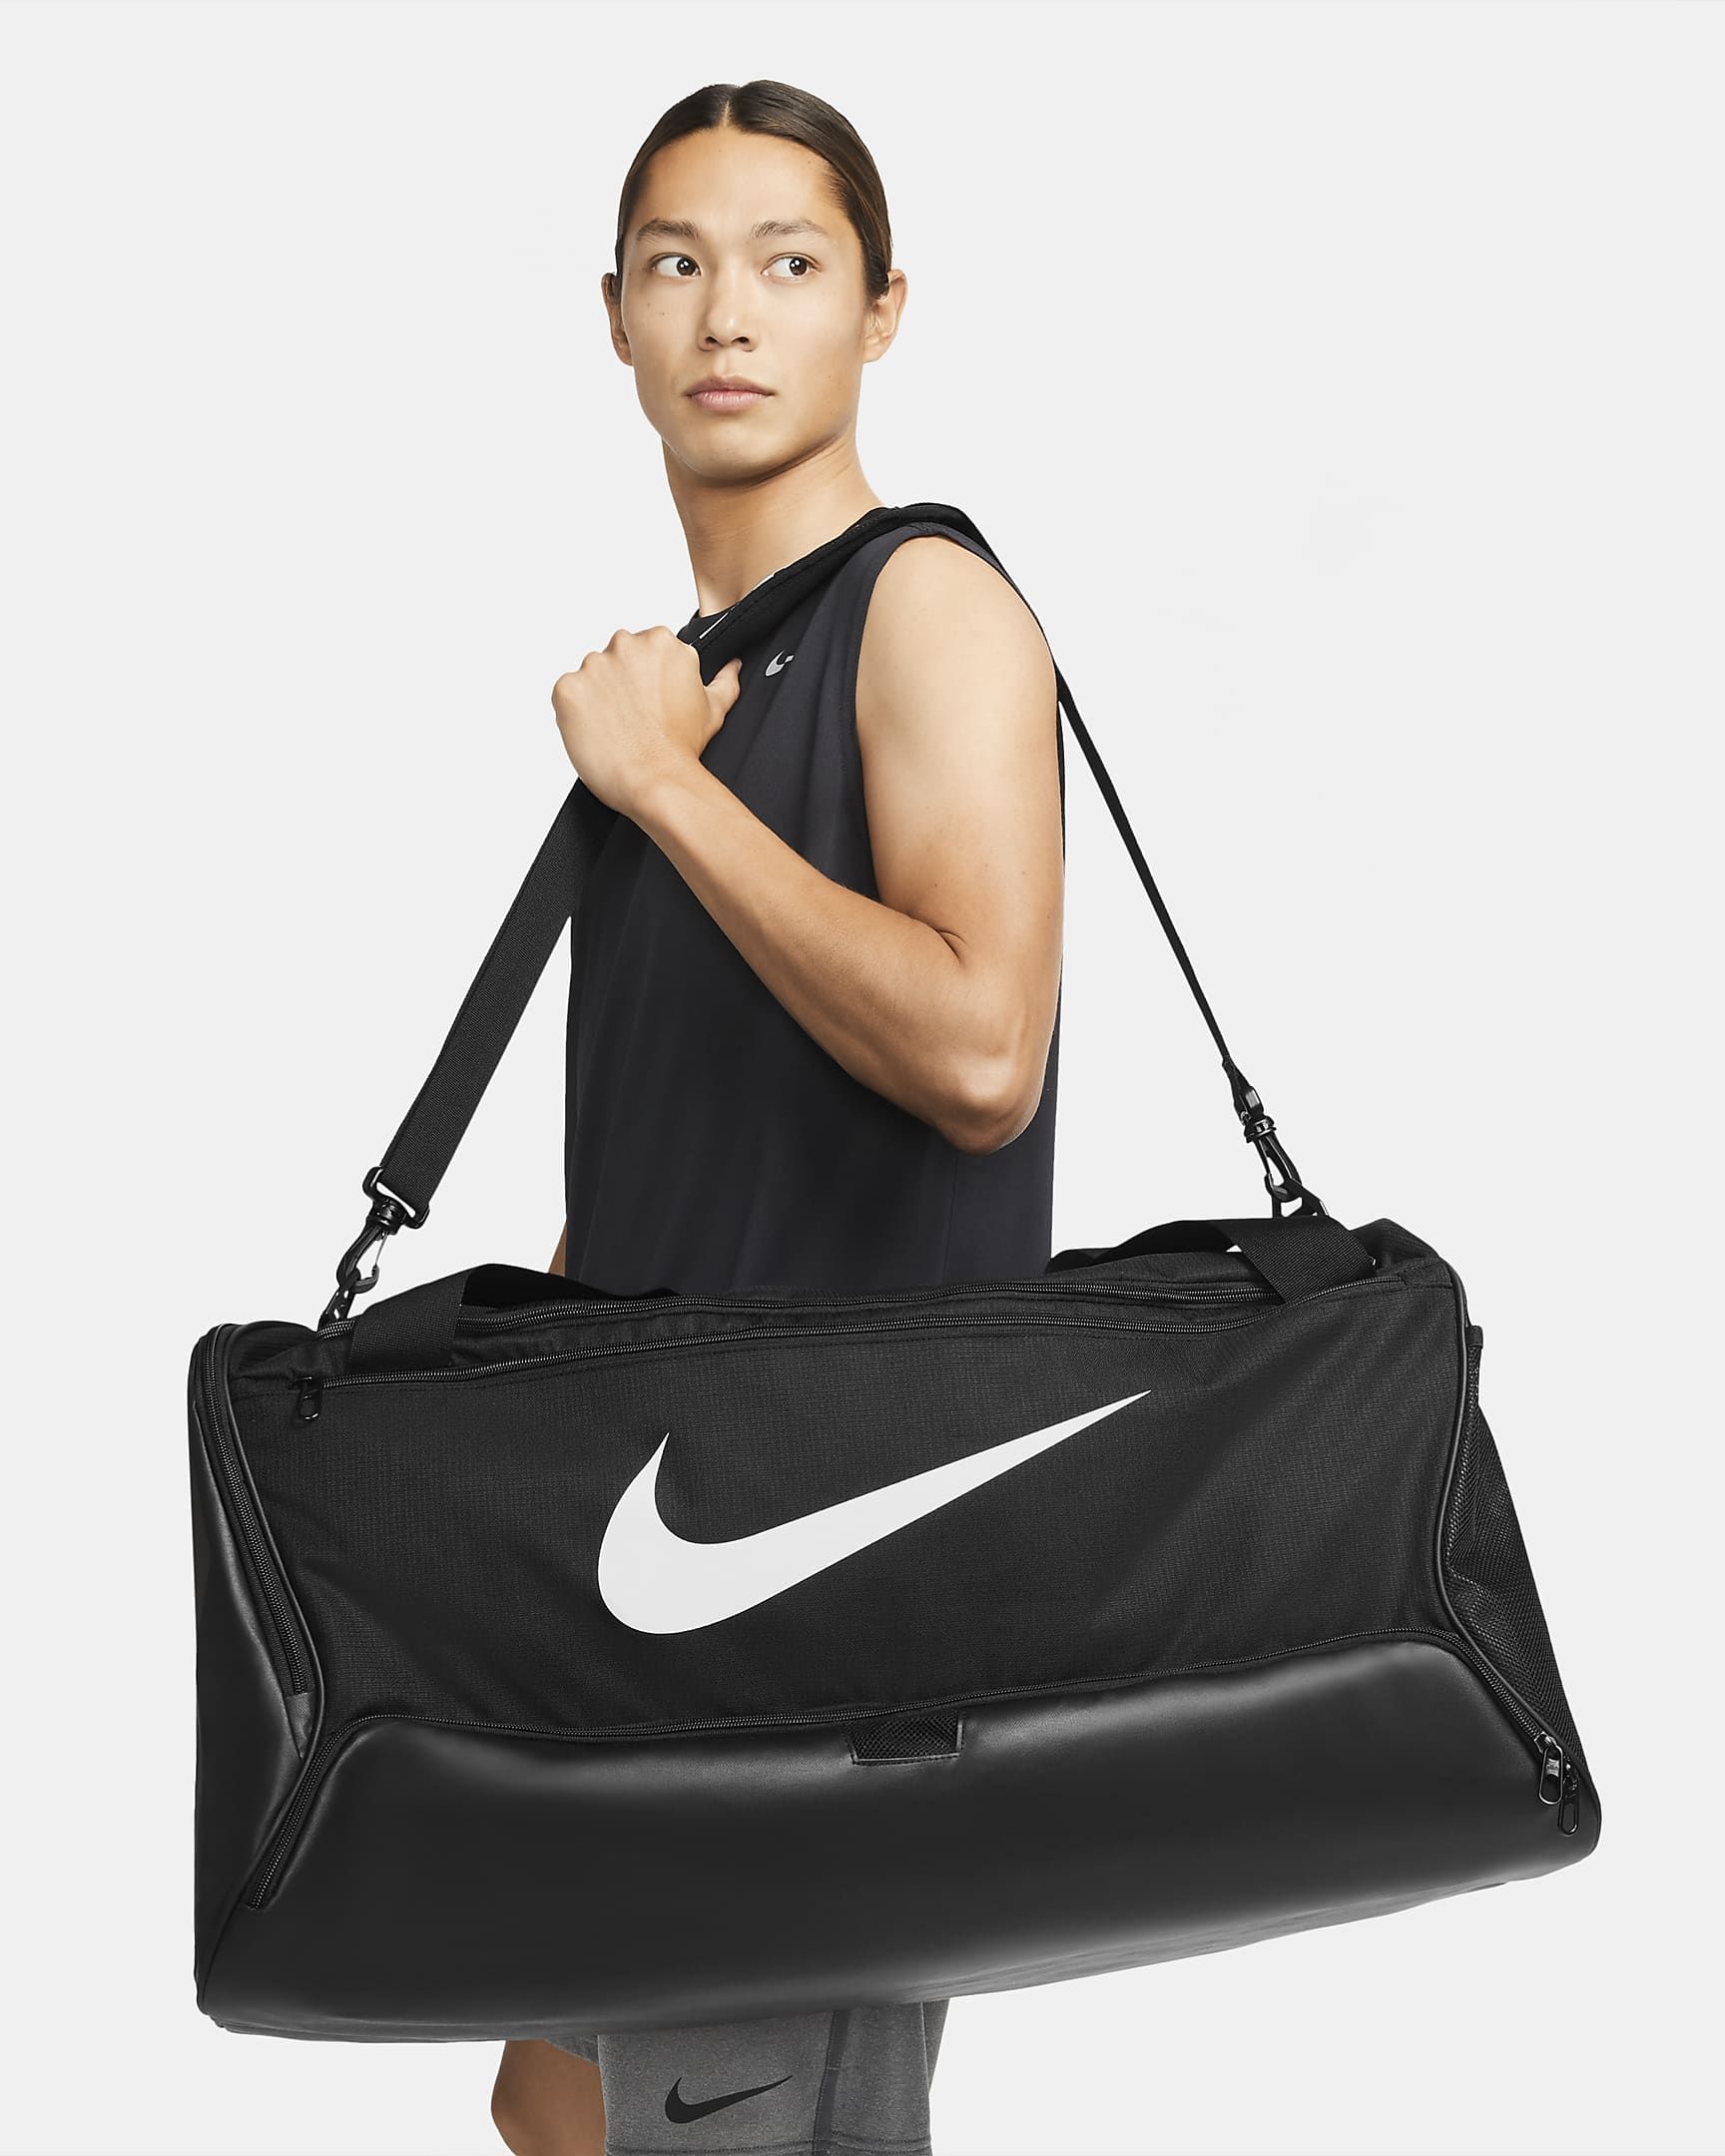 Nike Brasilia 9.5 Training Duffel Bag (Large, 95L). Nike.com | Nike (US)